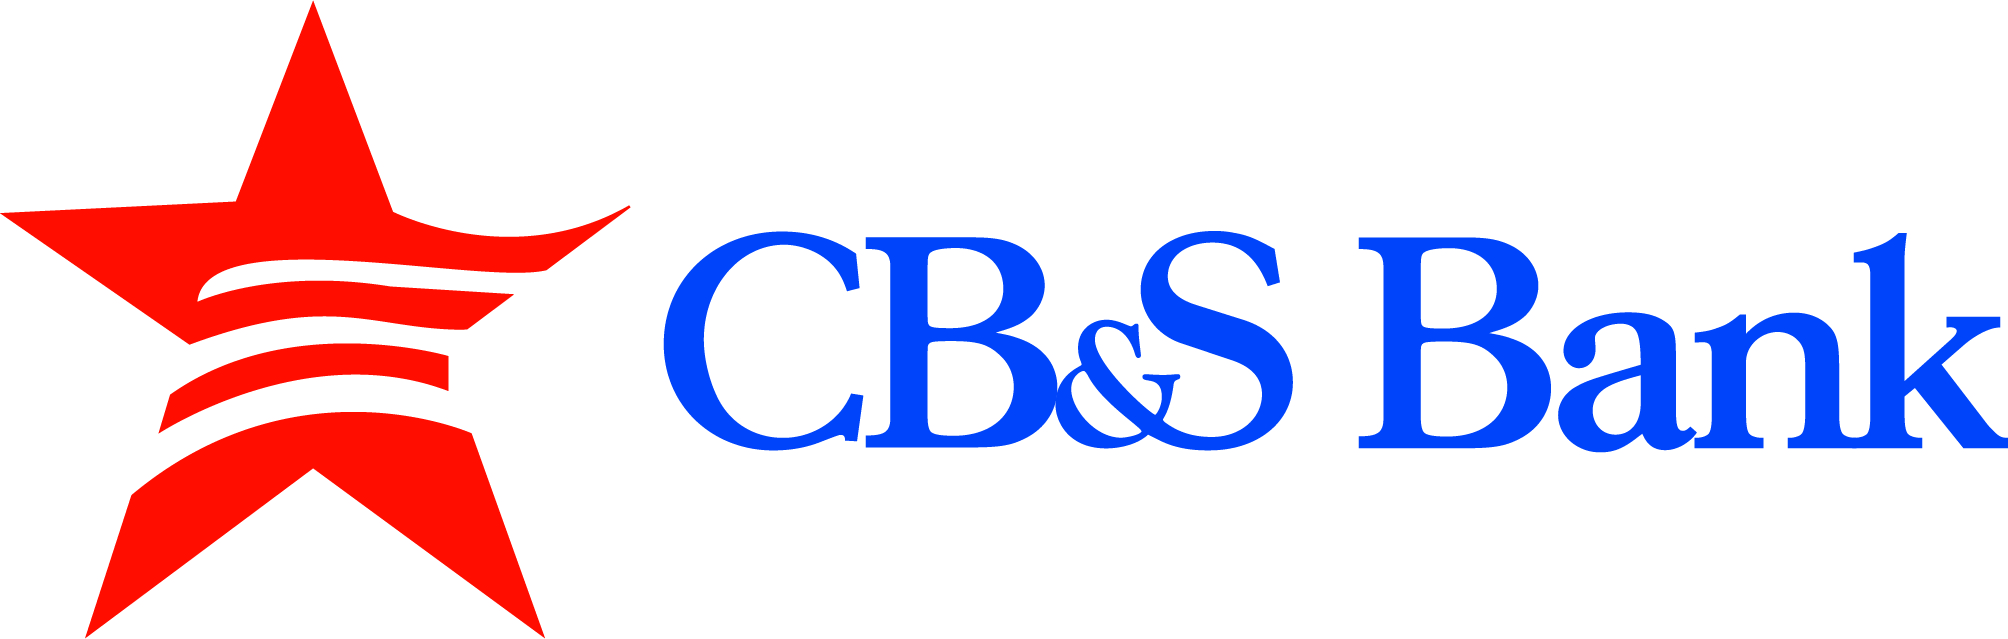 CB&S Bank Logo